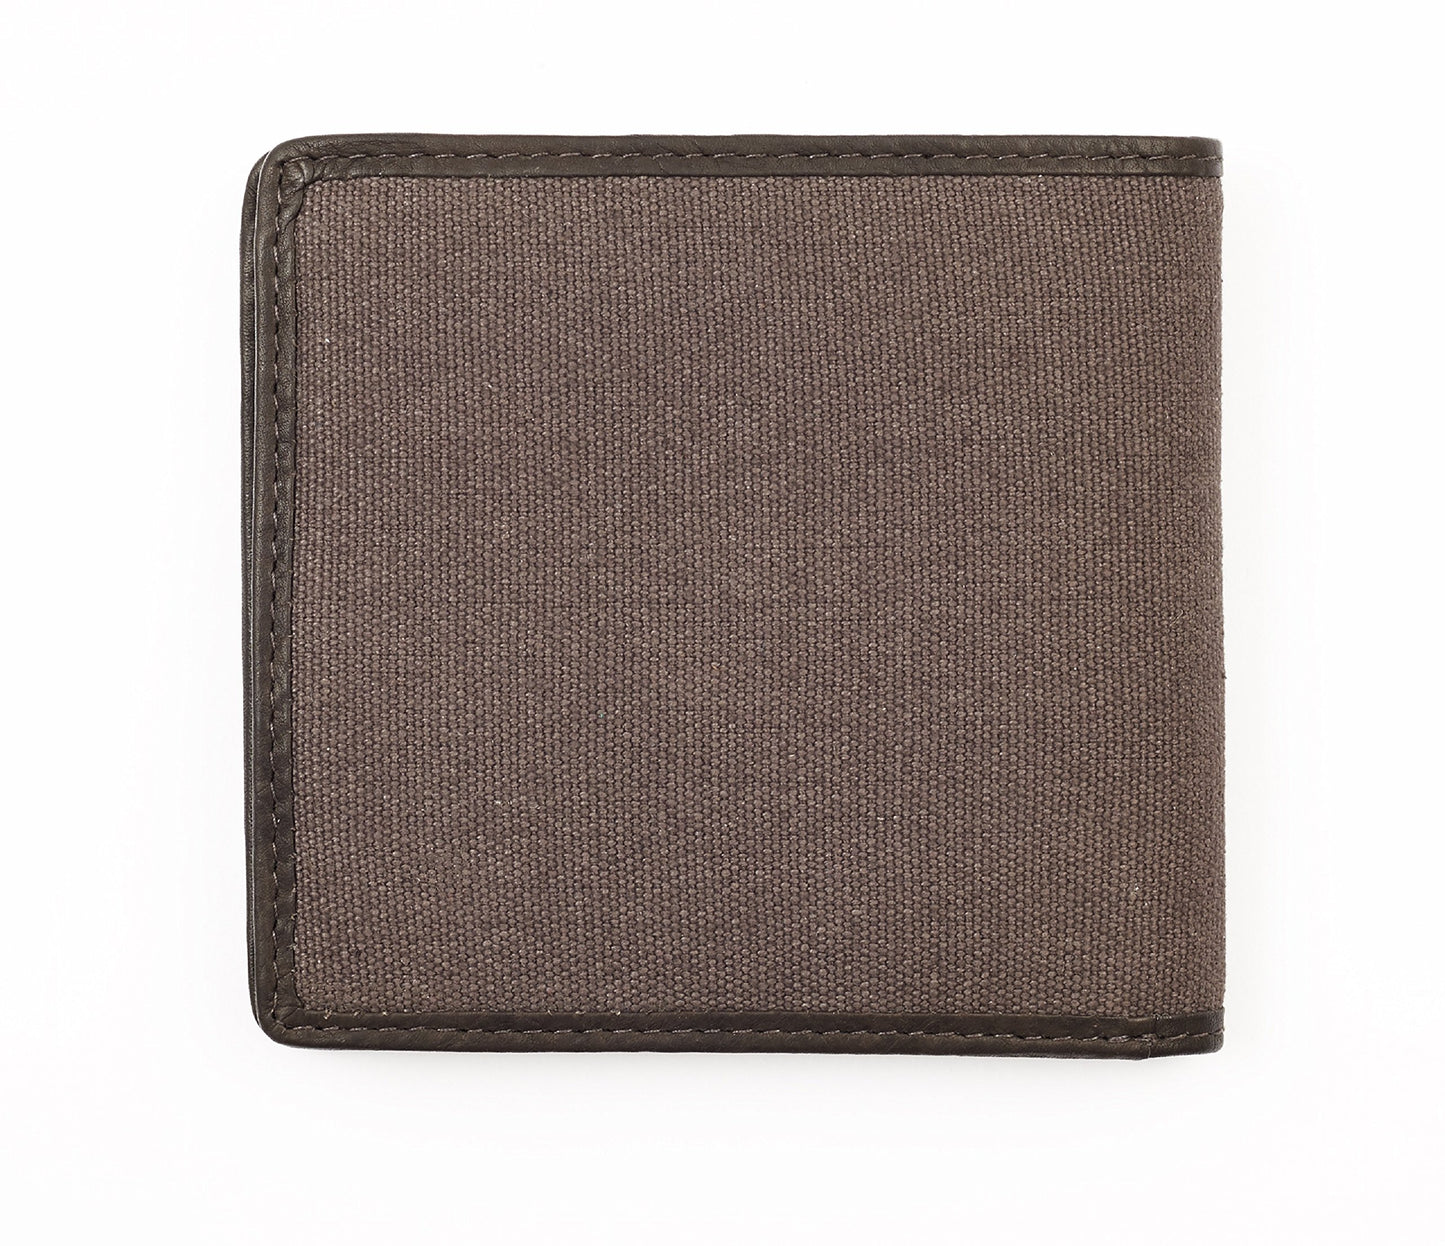 Zippo Men's Leather Accessories Coin Pouch, 11 cm, Mocha & Grey